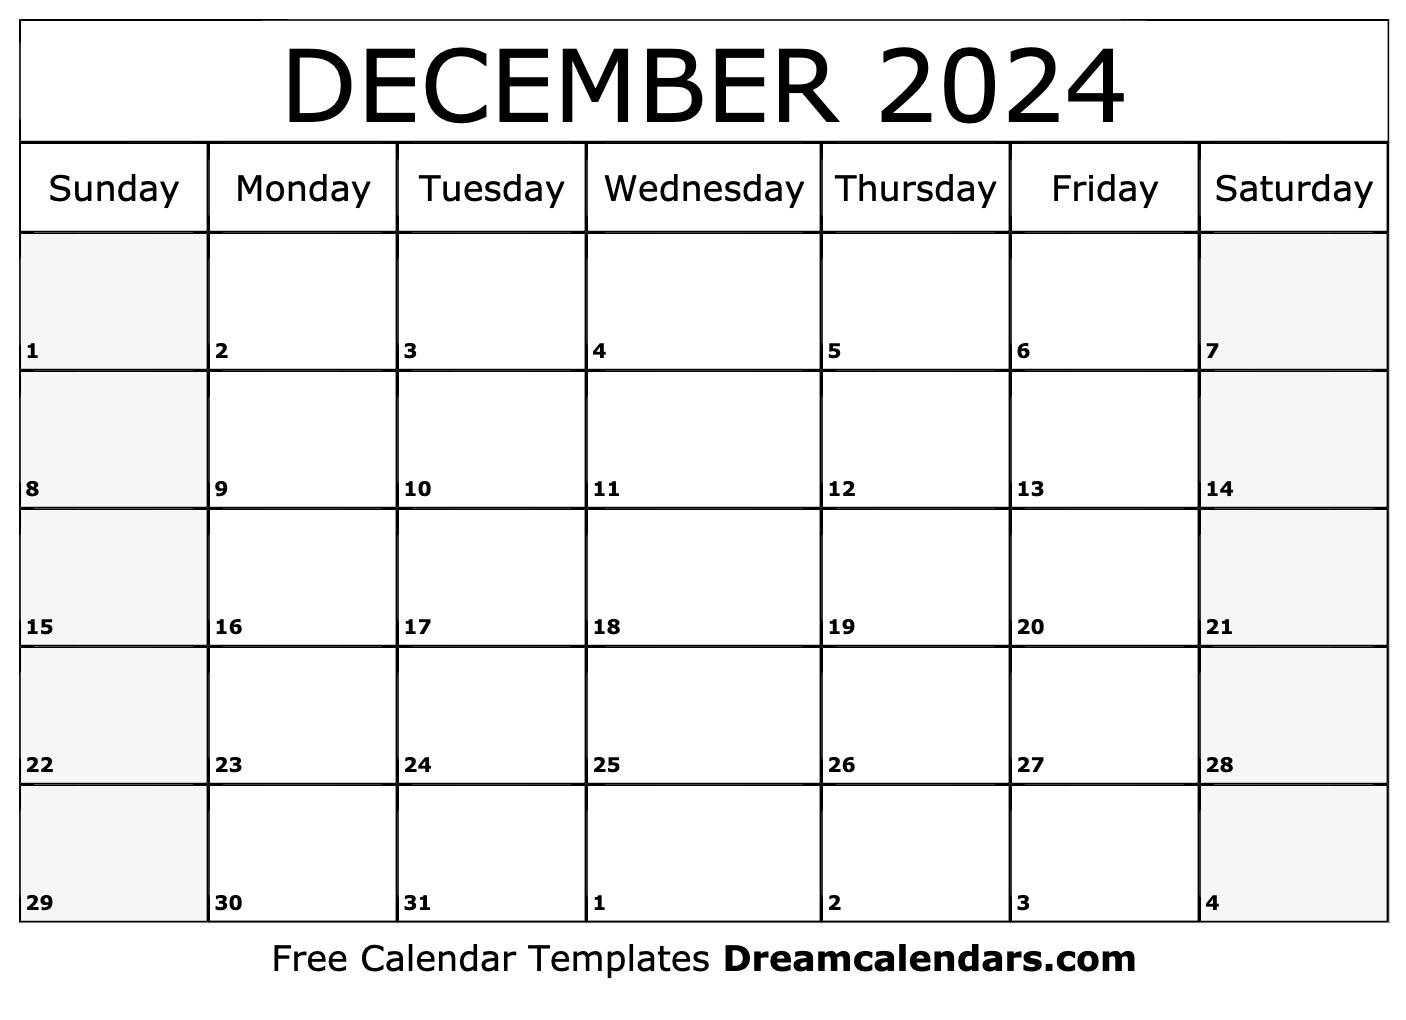 December 2024 Calendar | Free Blank Printable With Holidays for Free Printable Calendar 2024 December